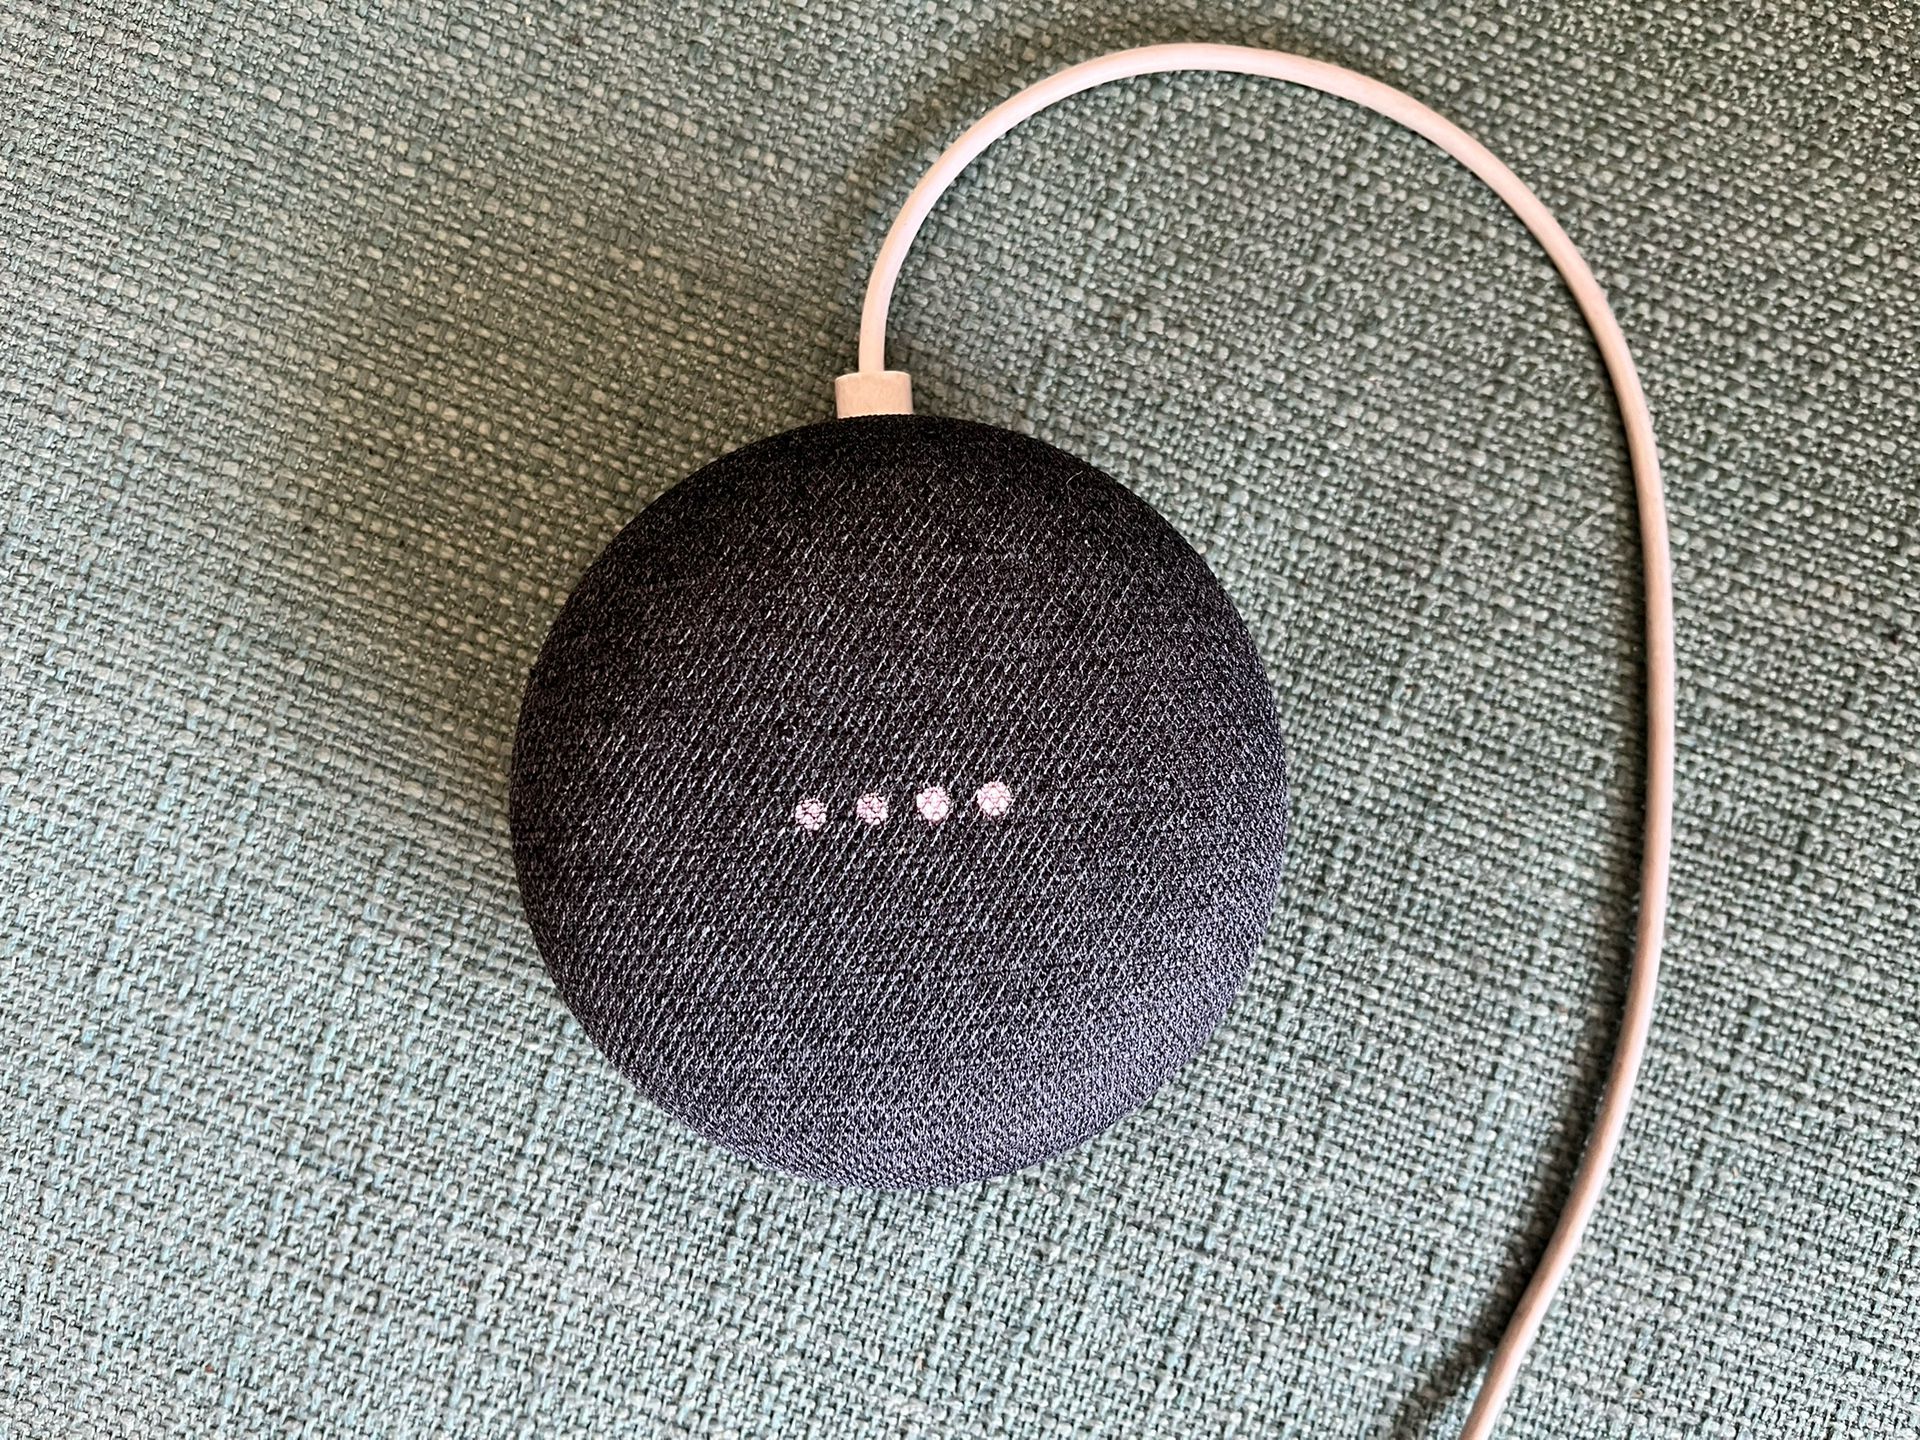 Google Nest Mini 2nd Gen Smart Bluetooth Speaker